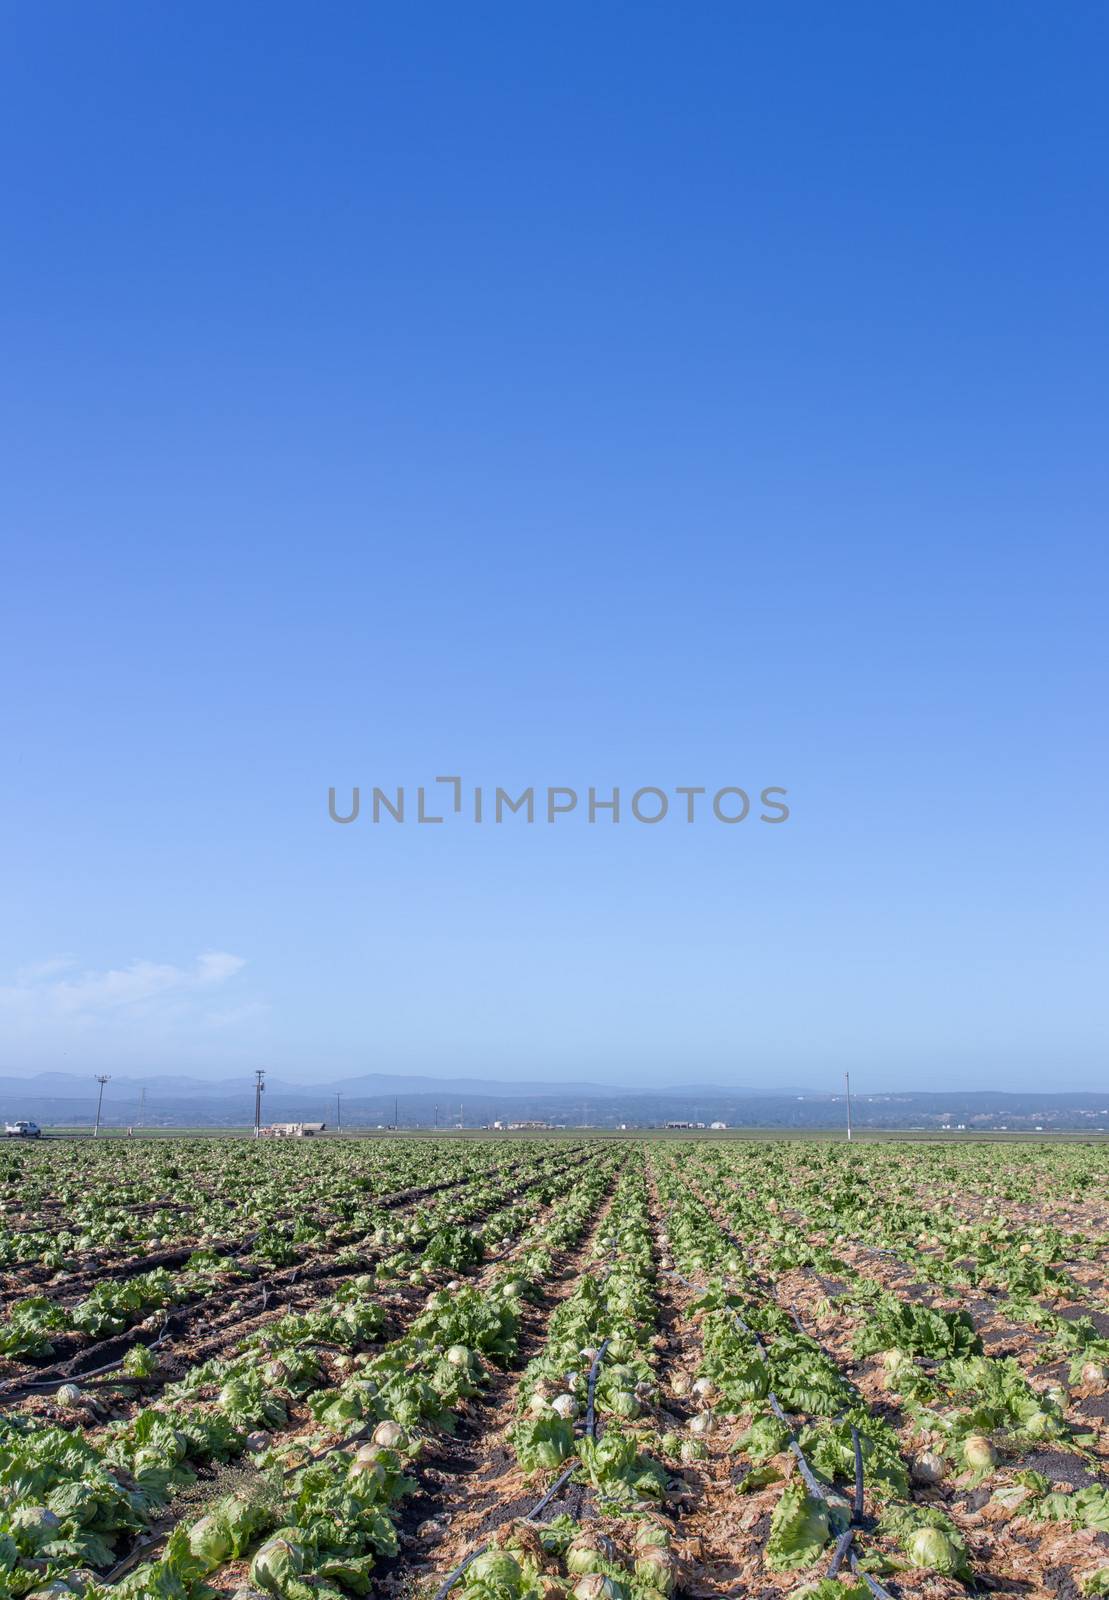 Harvested Lettuce Fields in Salinas Valley California.